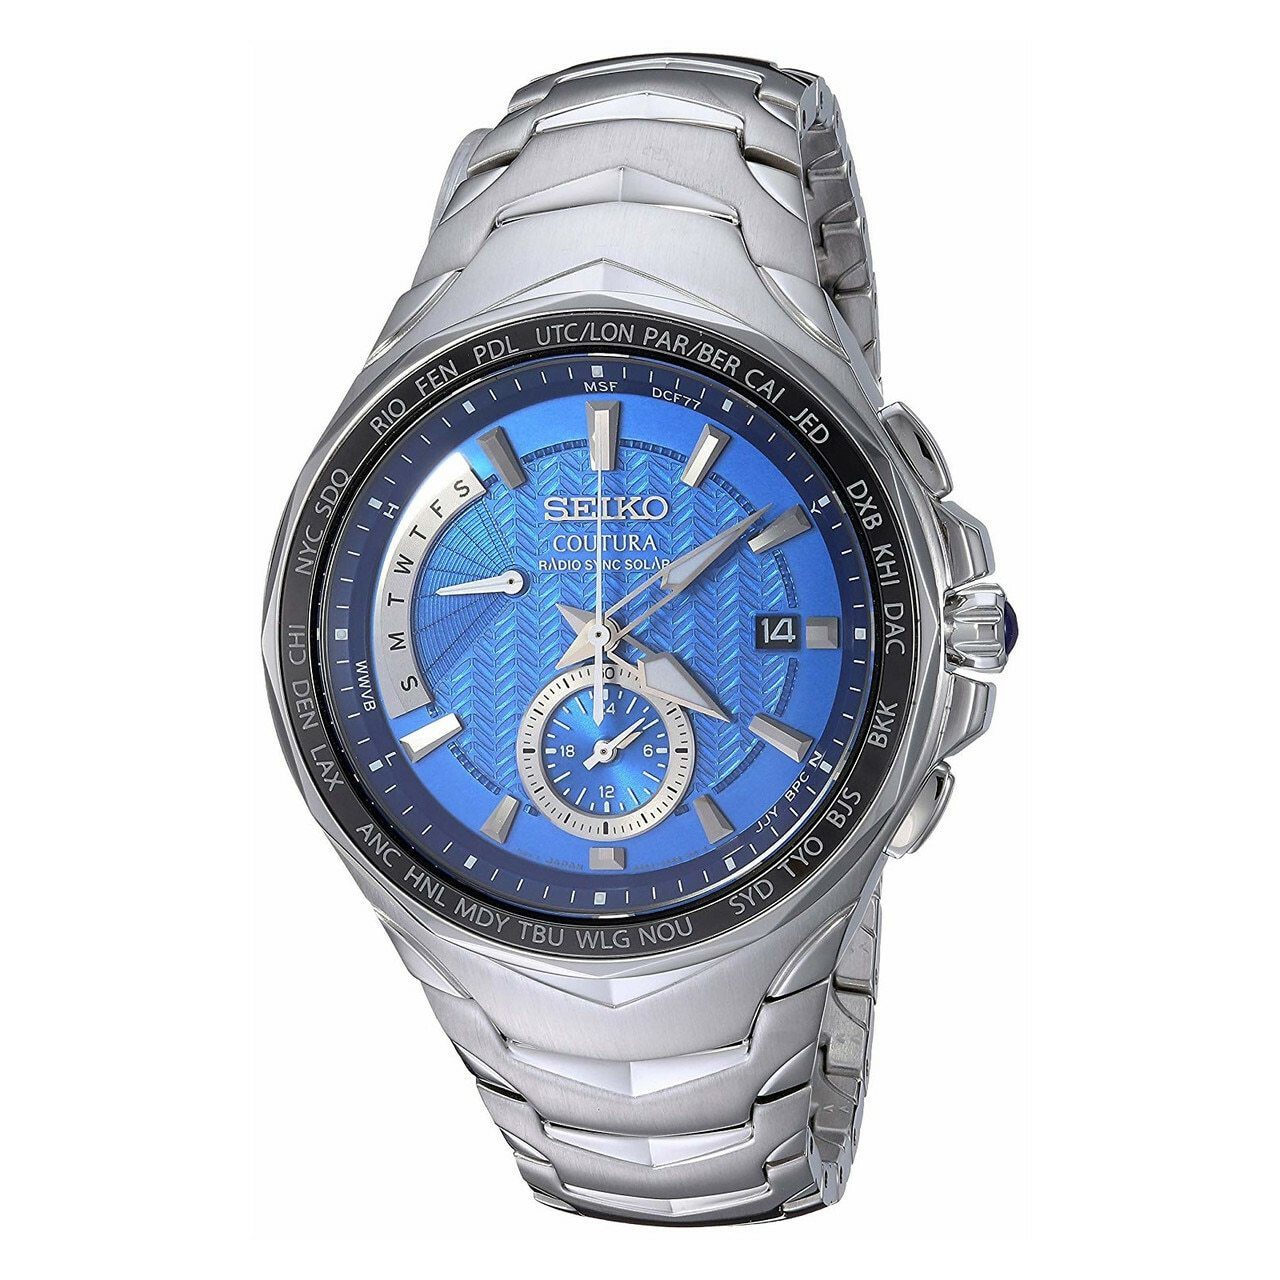 Seiko SSG019 Coutura Radio Sync Stainless Steel Blue Dial Men's Chronograph Watch